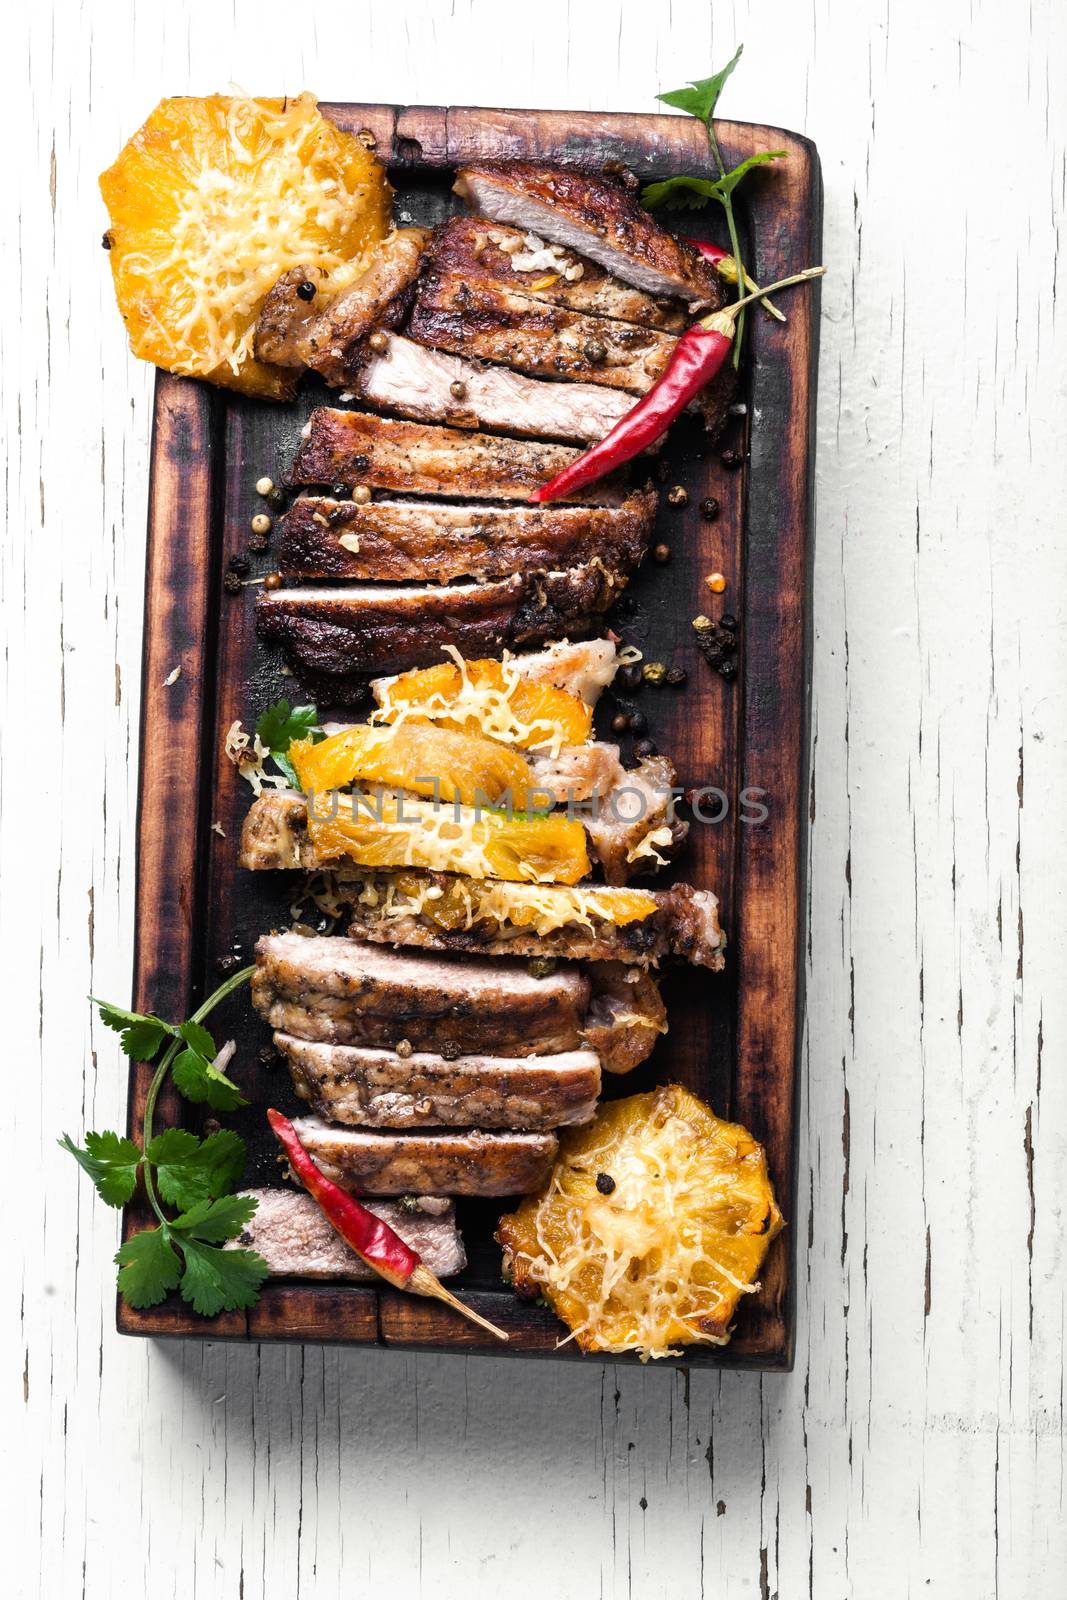 Juicy beef steak slices on wooden board